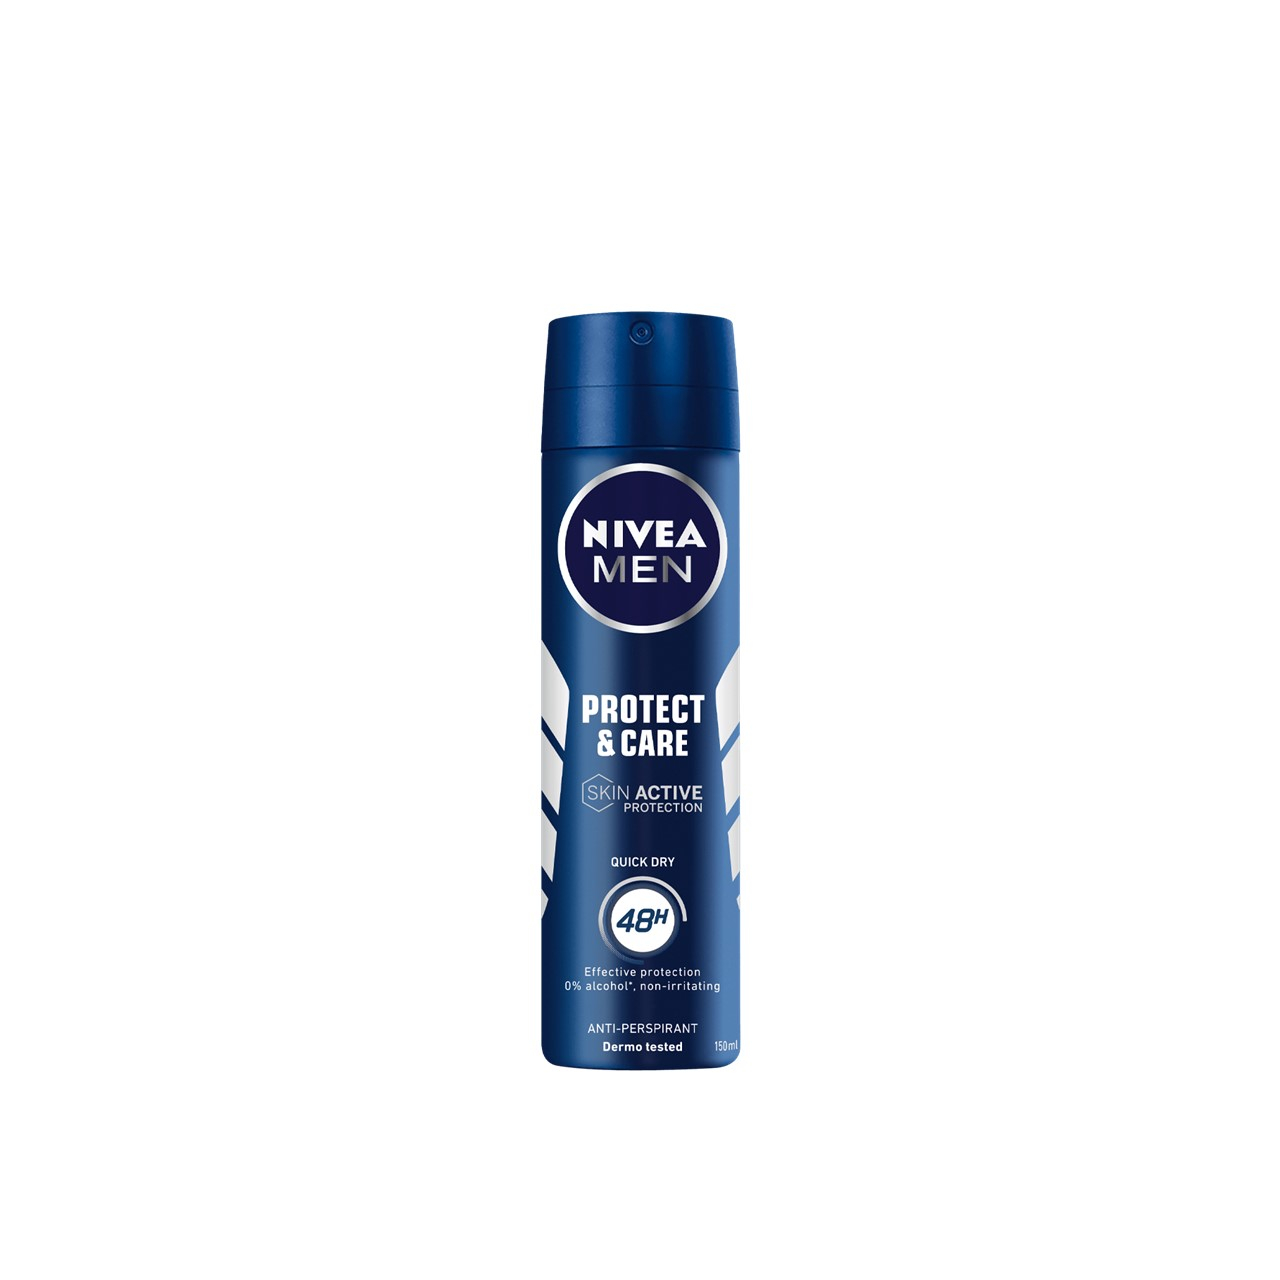 Nivea Men Protect & Care Quick Dry 48h Anti-Perspirant Spray 150ml